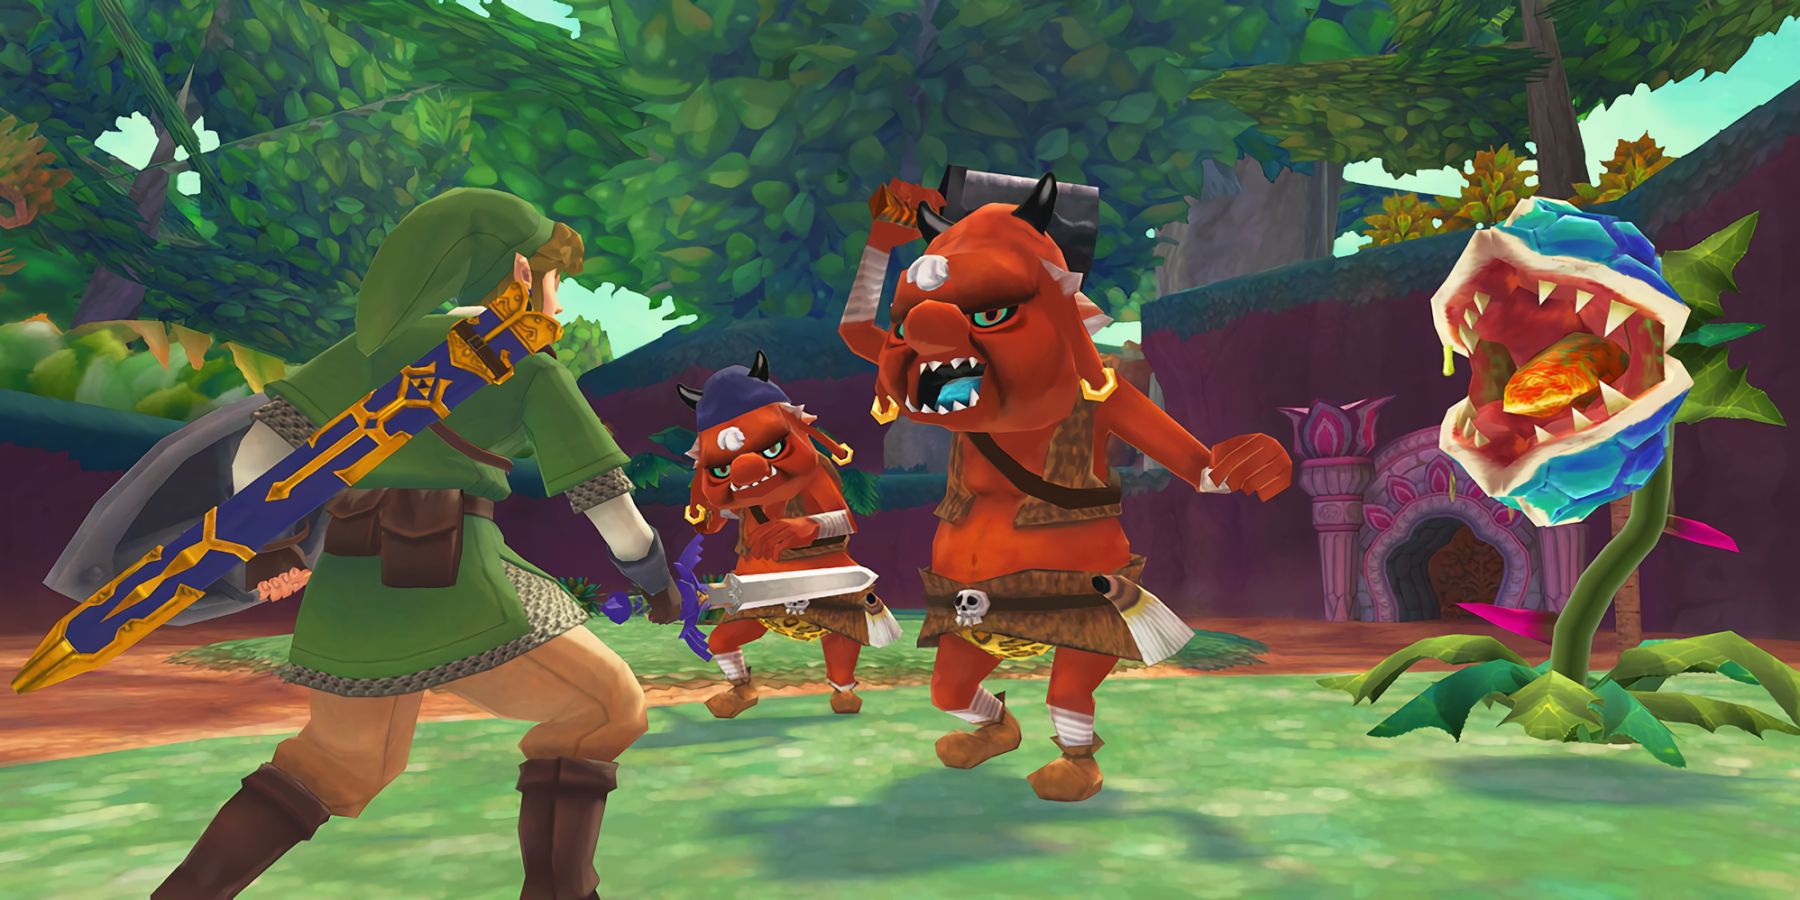 A screenshot from Zelda: Skyward Sword showing Link fighting Bokoblins and a Deku Baba.